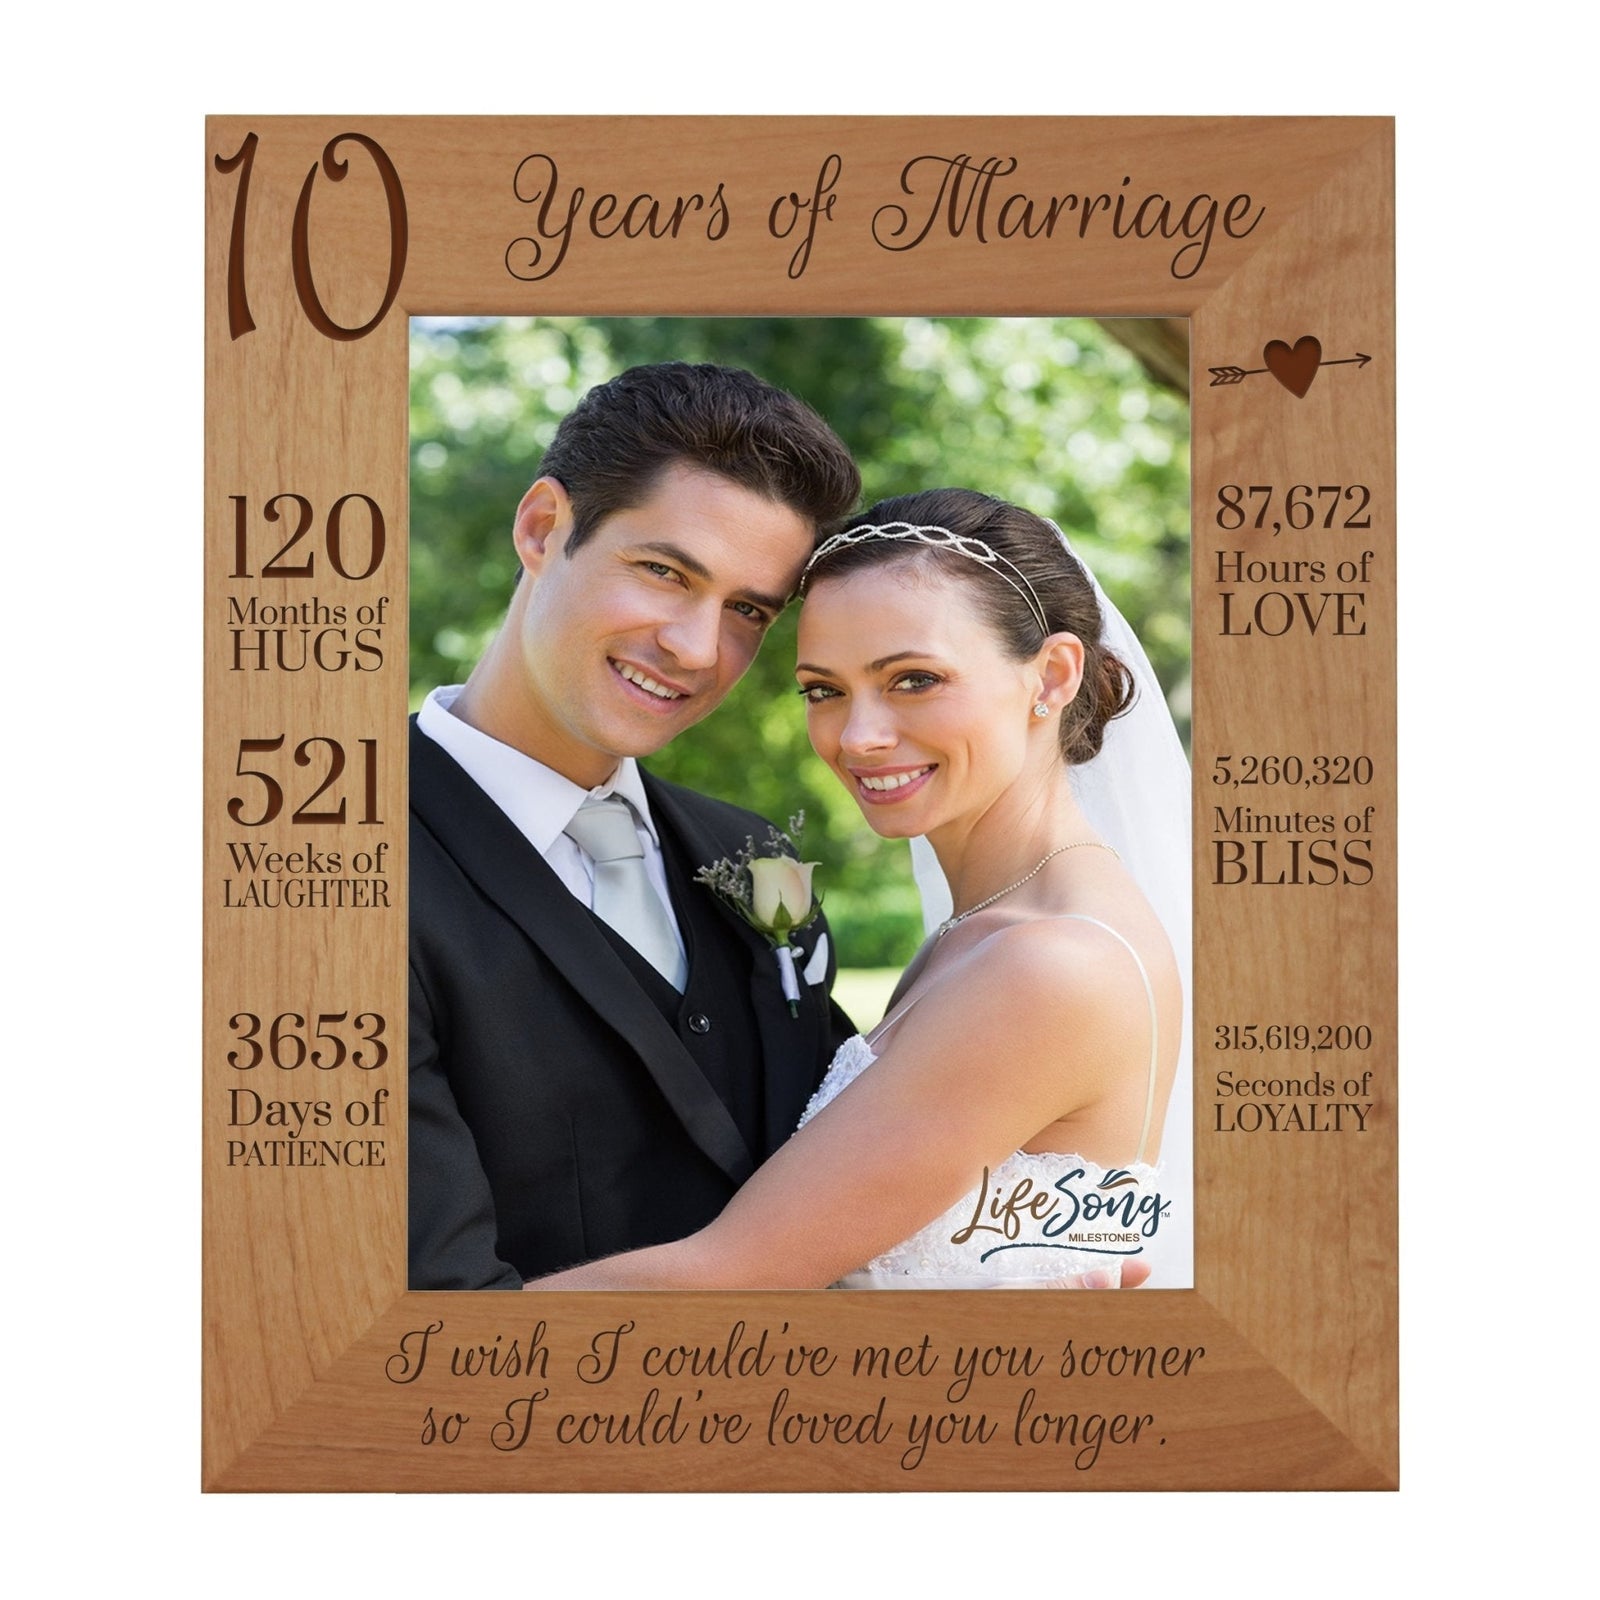 Couples 10th Wedding Anniversary Photo Frame Home Decor Gift Ideas - Met You Sooner - LifeSong Milestones